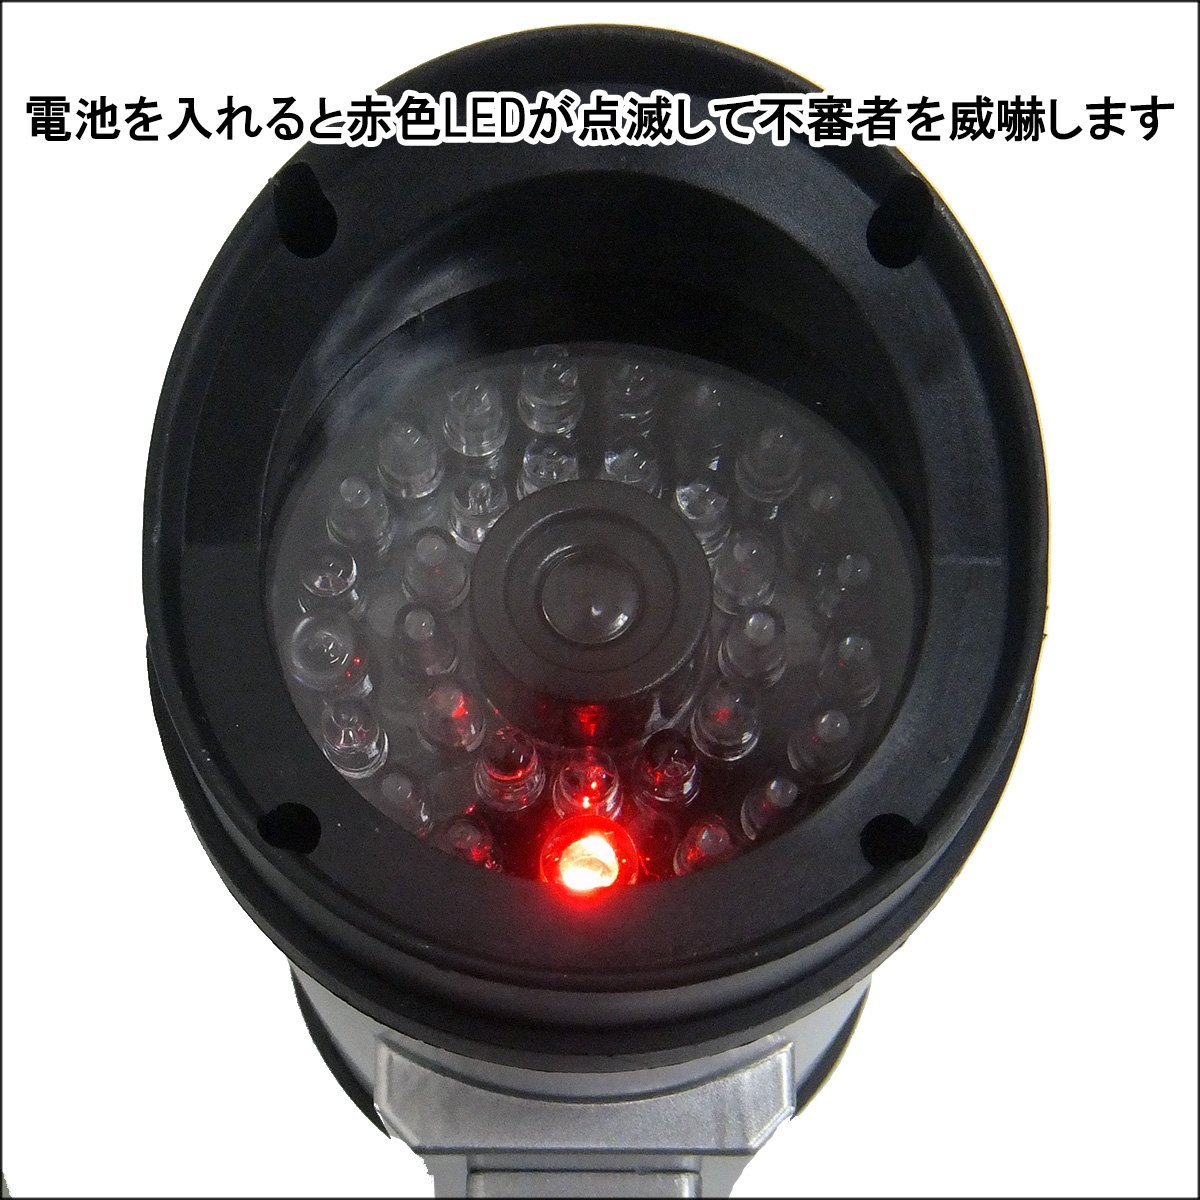 IRカメラ型 ダミーカメラⅡ 防犯カメラ 赤色LED点滅 配線不要 防犯対策 監視 簡単設置 防犯ステッカー2種類付/9_画像3